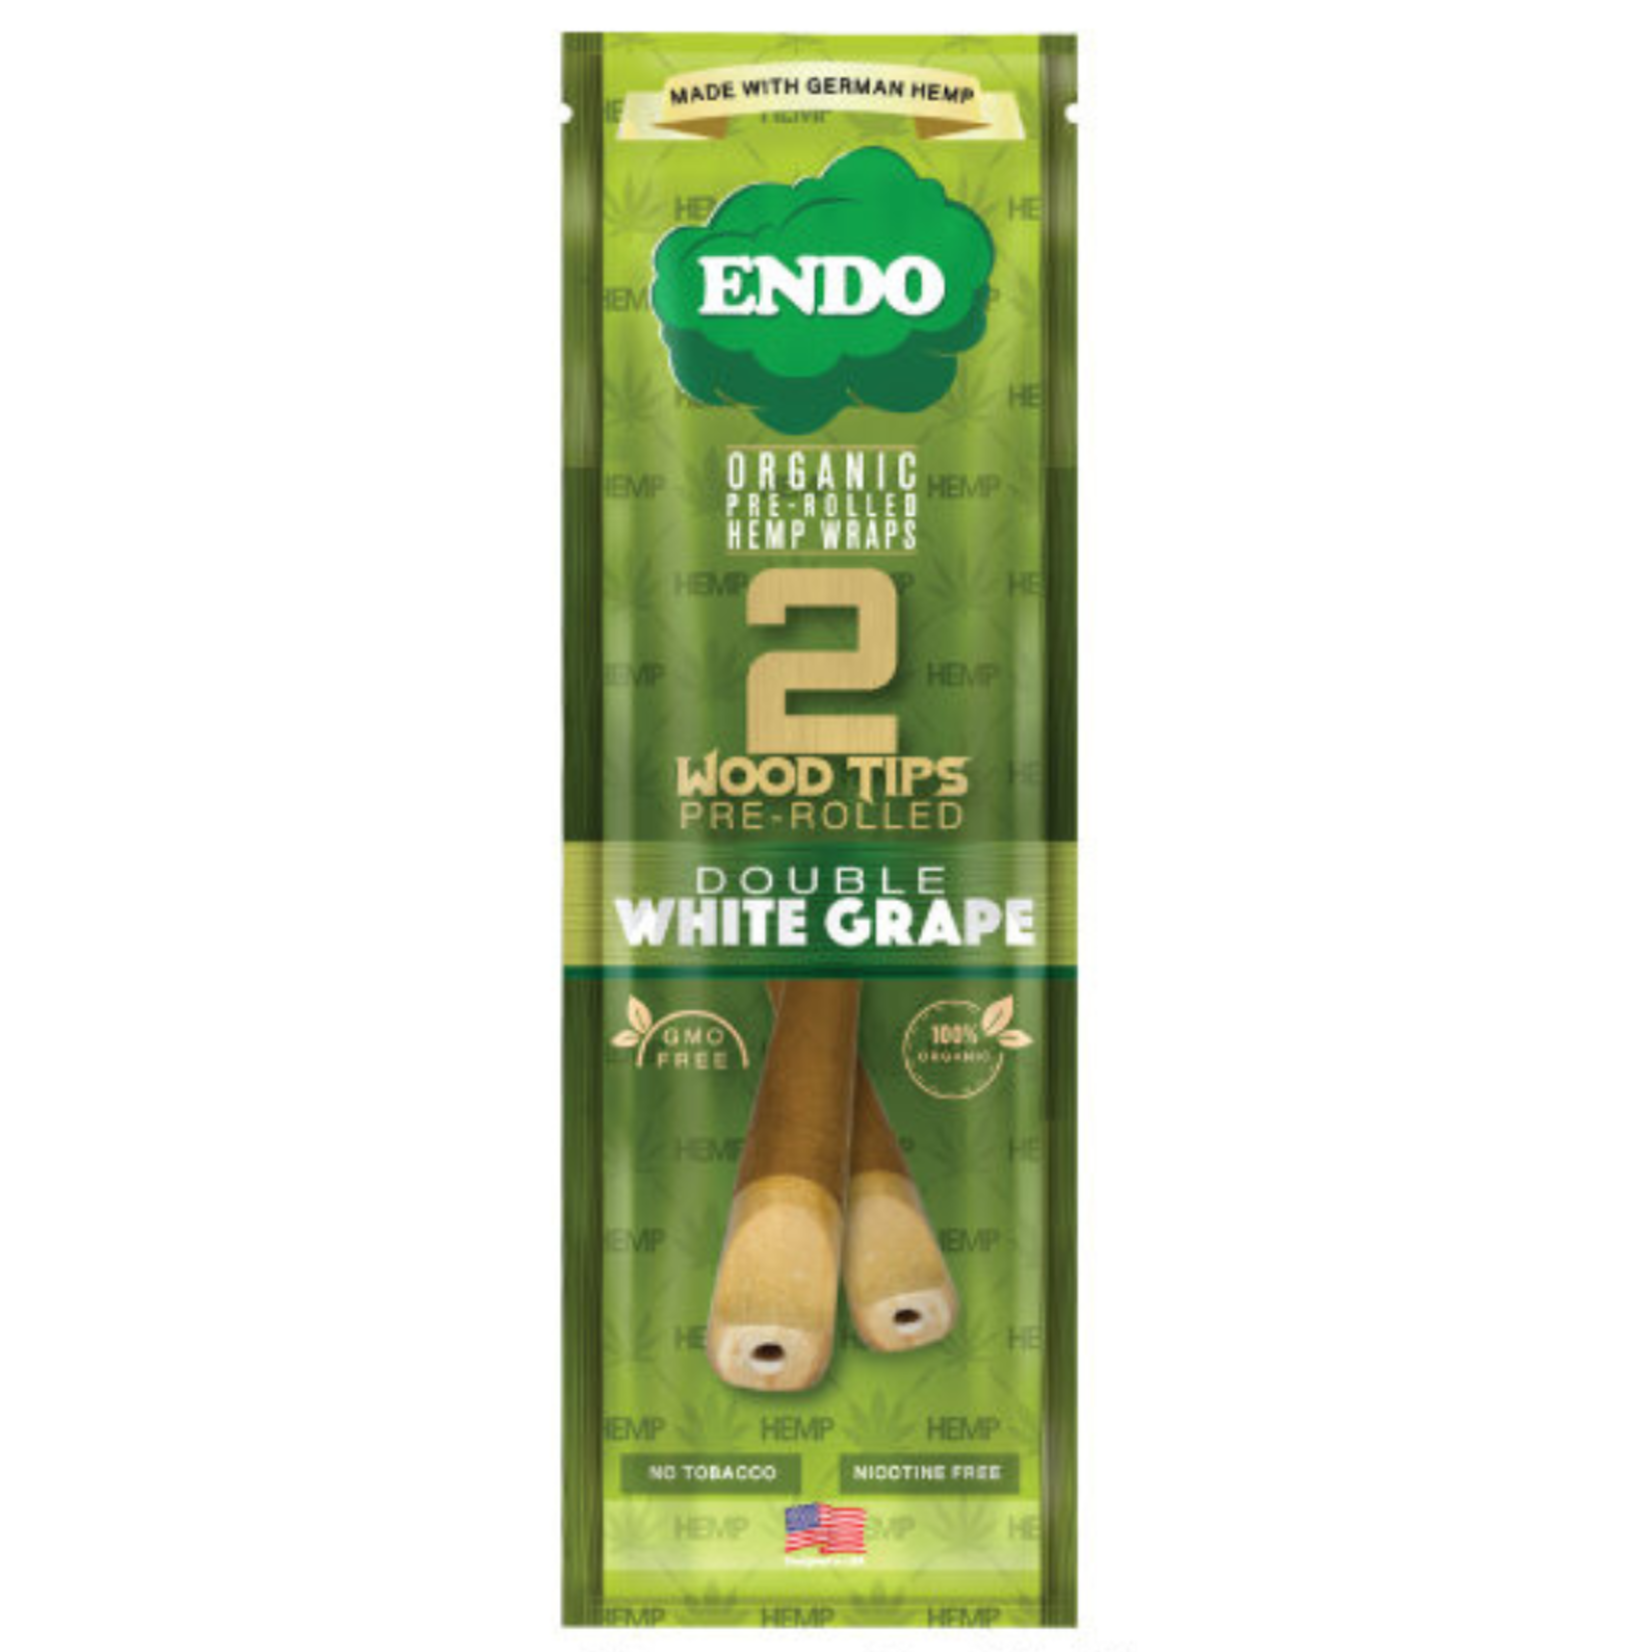 ENDO  Pre-Rolled Hemp Wraps w/ Wood Tips